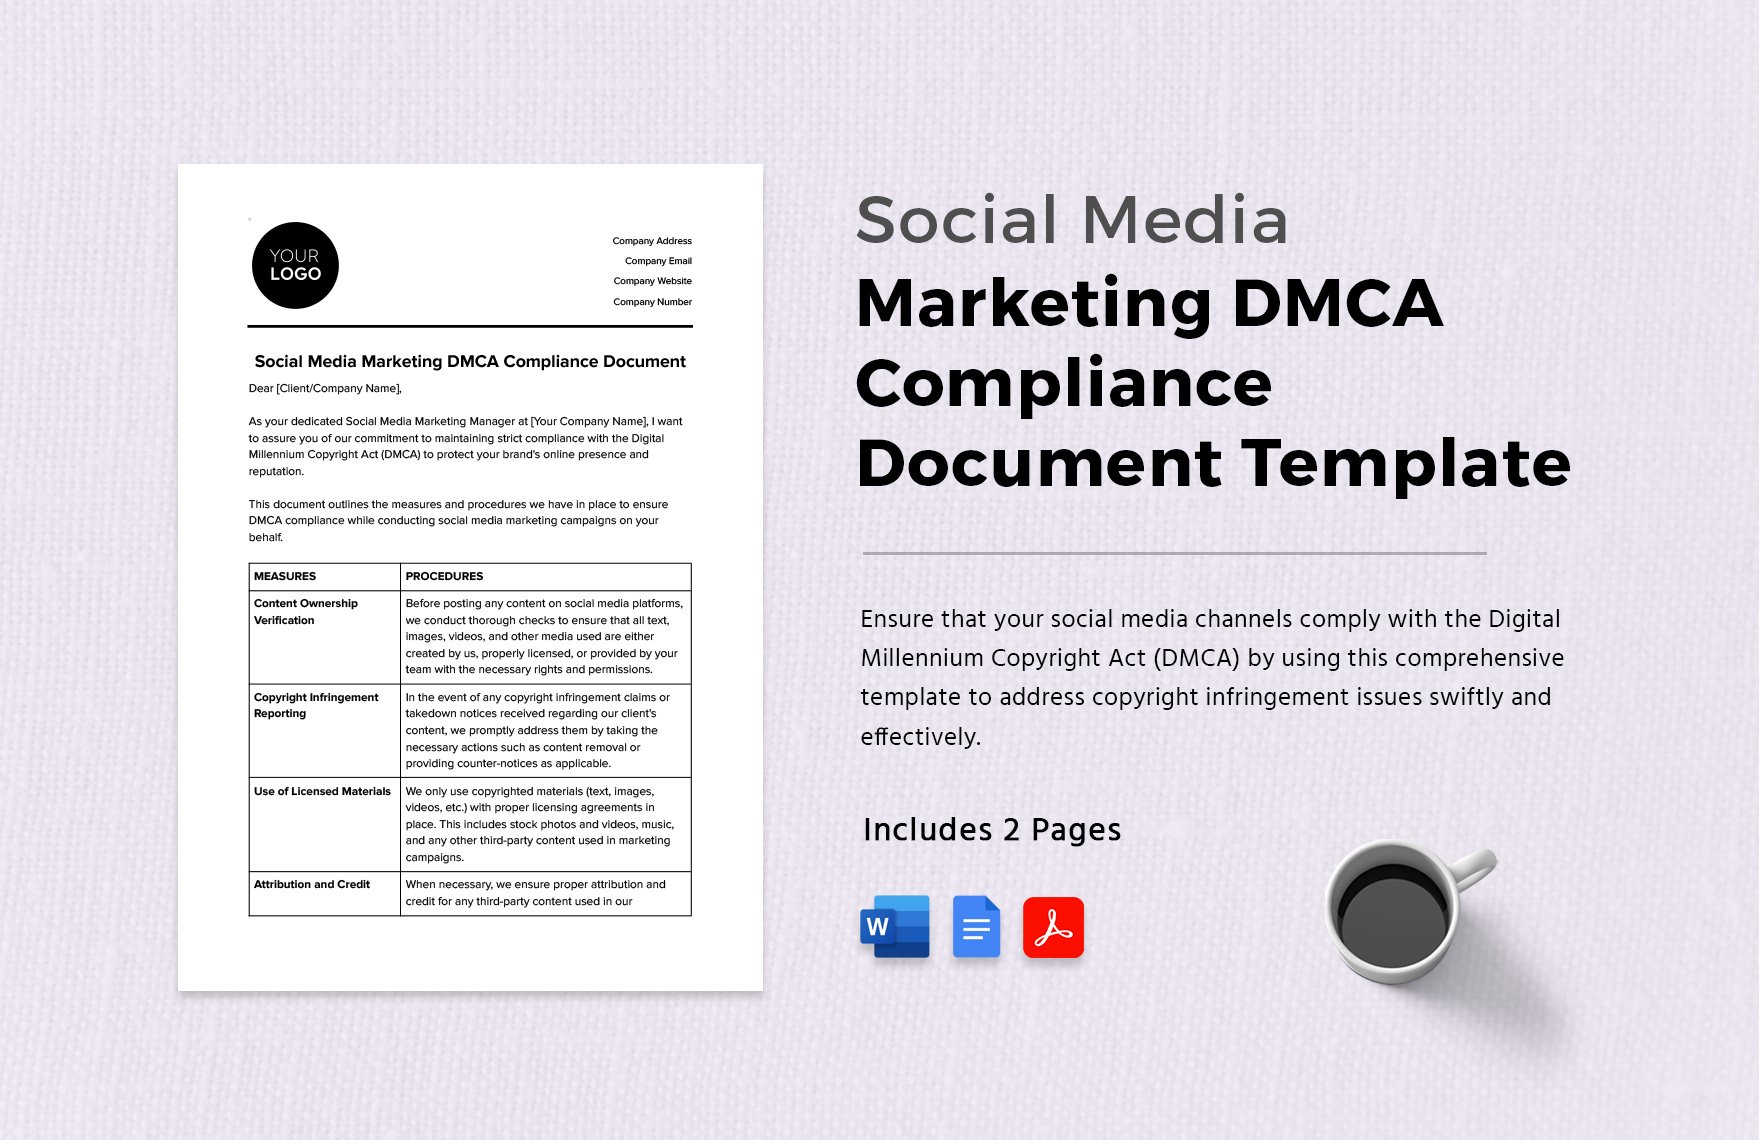 Social Media Marketing DMCA Compliance Document Template